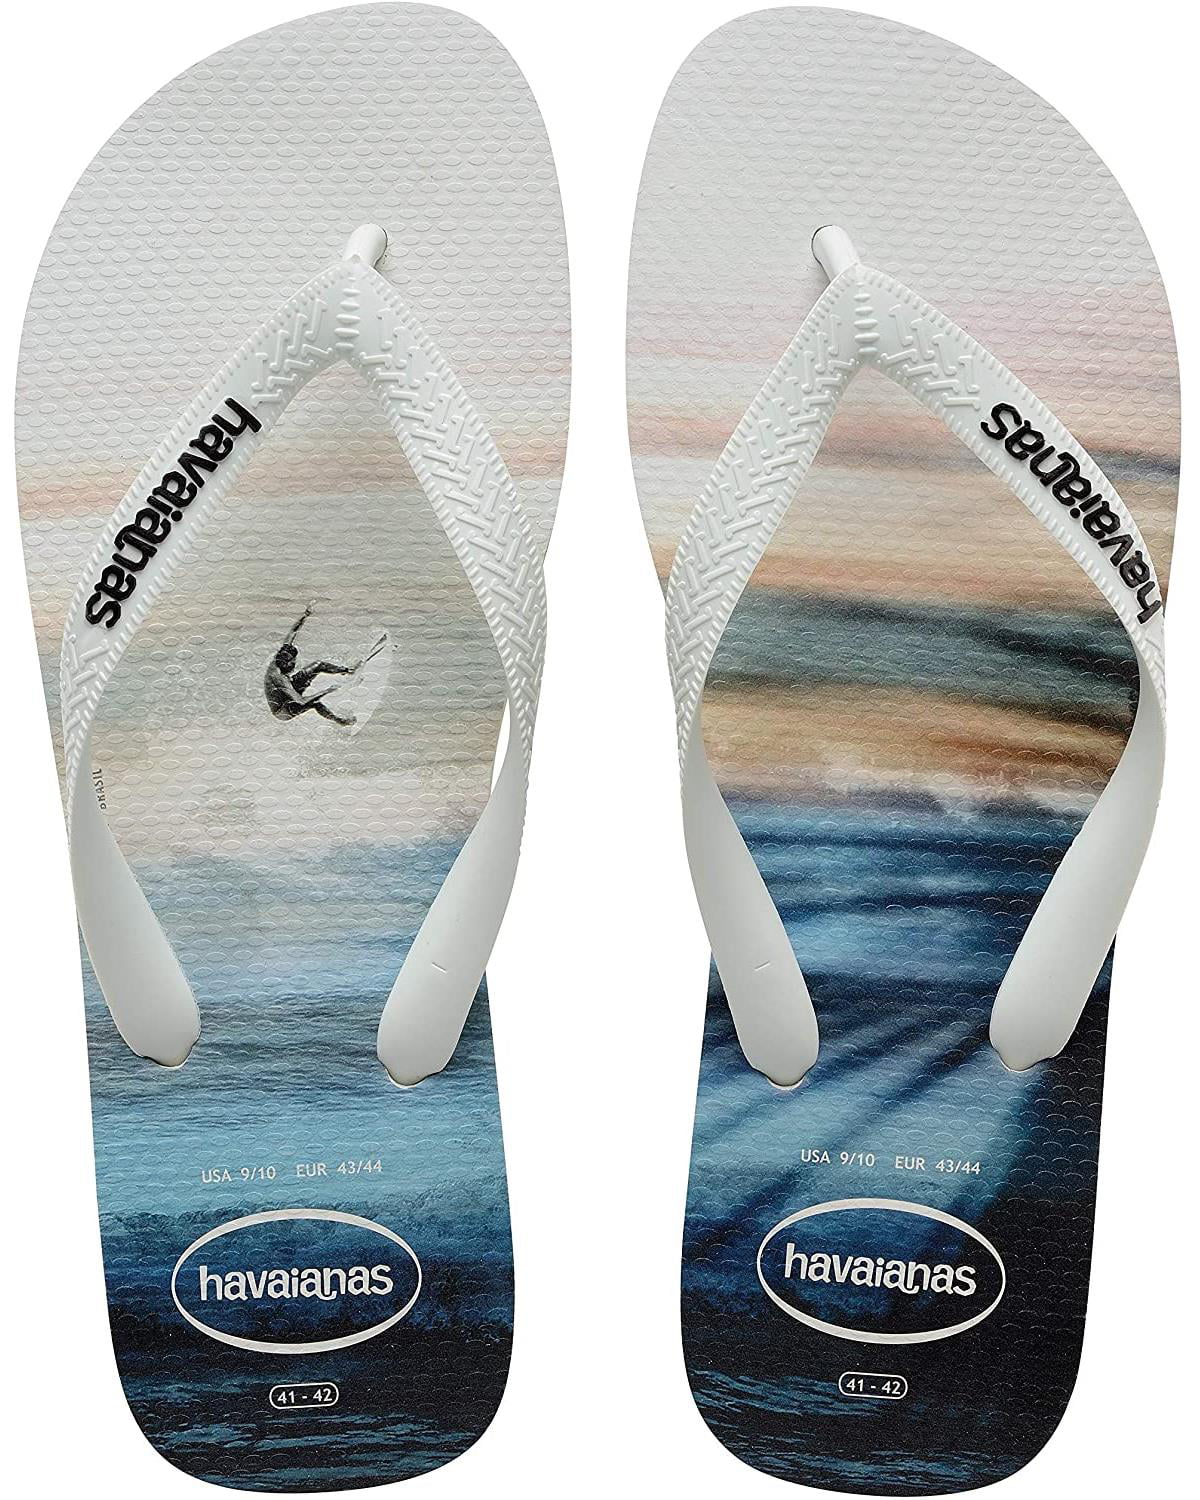 Mens Sandlas Havaianas Men's Flip Flops Made In Brazil New Hype Model Surf